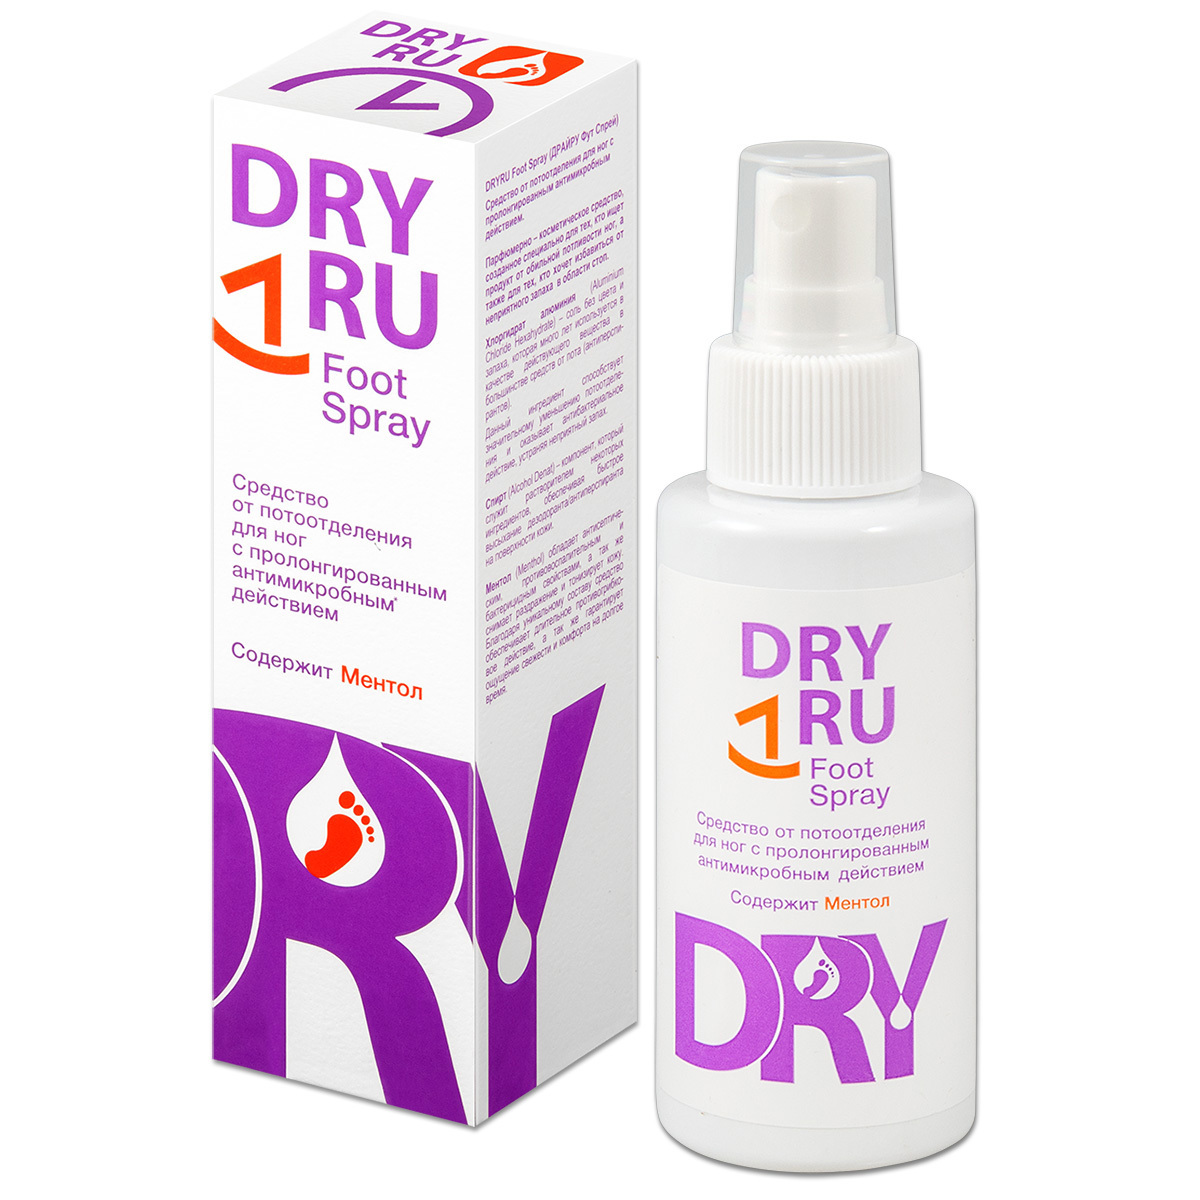 Dry dry foot. Драй драй для ног. Dry Dry foot Spray. Антиперспирант Dry ru foot Spray. Гель Dry ru 1 foot Spray.